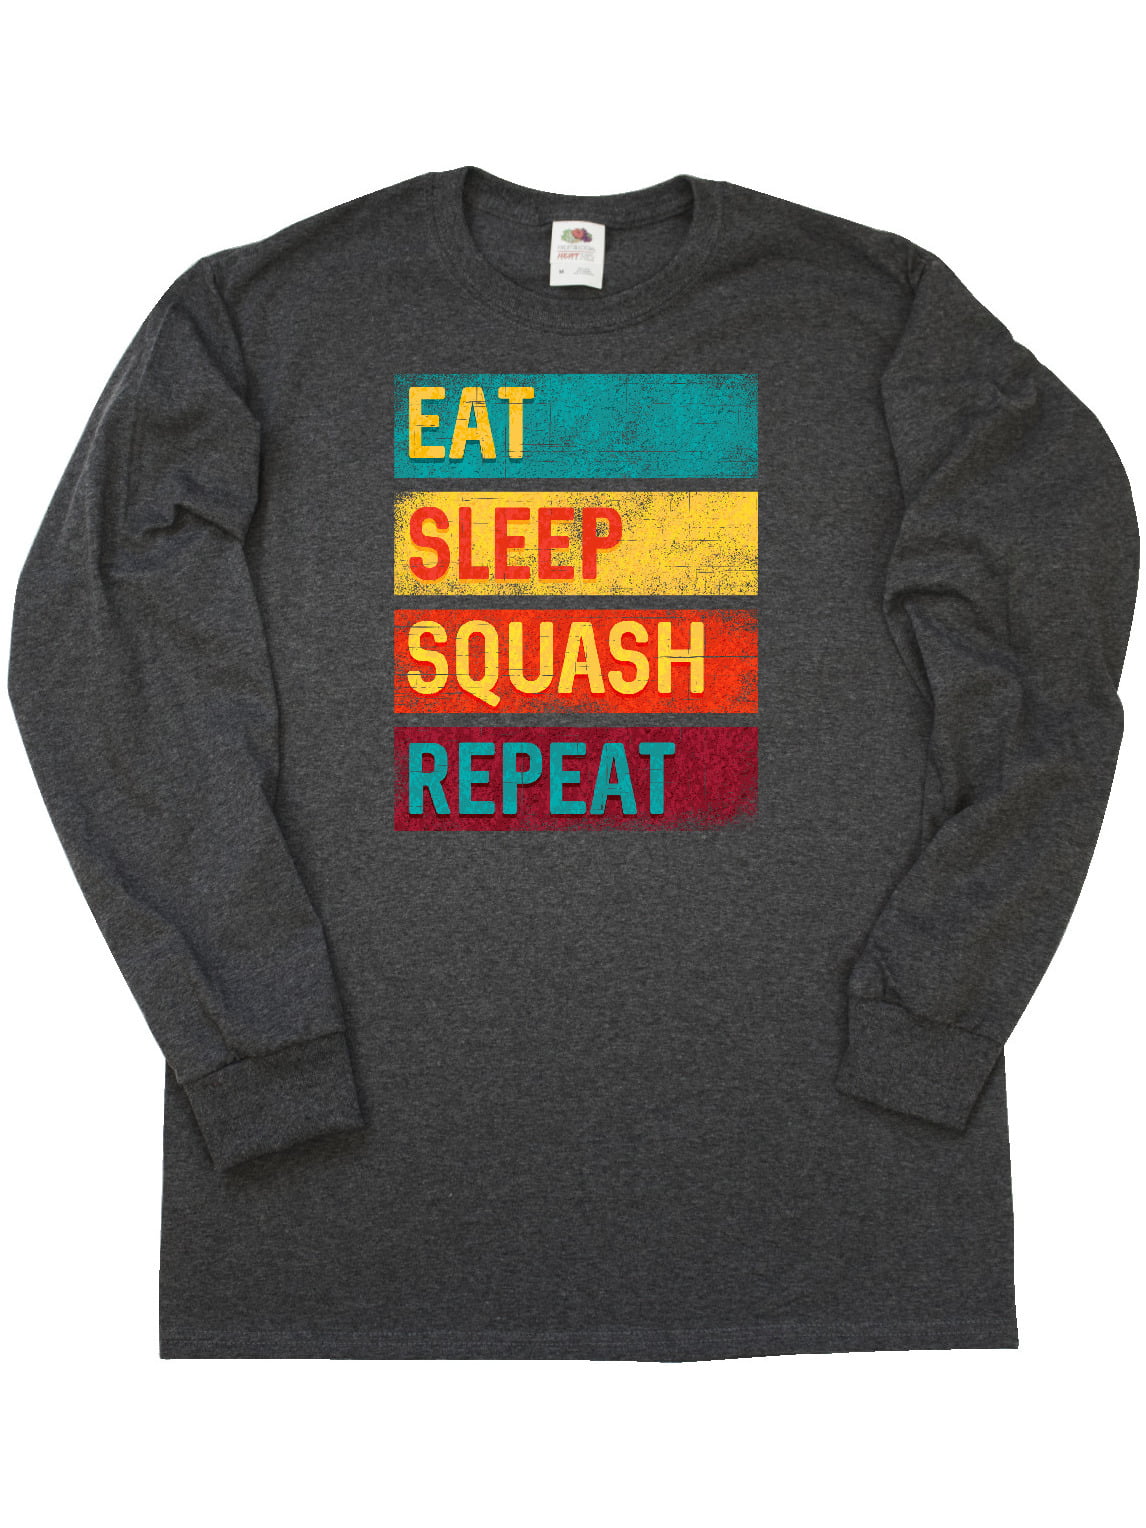 Mens T-Shirt Repeat Sleep Eat Squash 